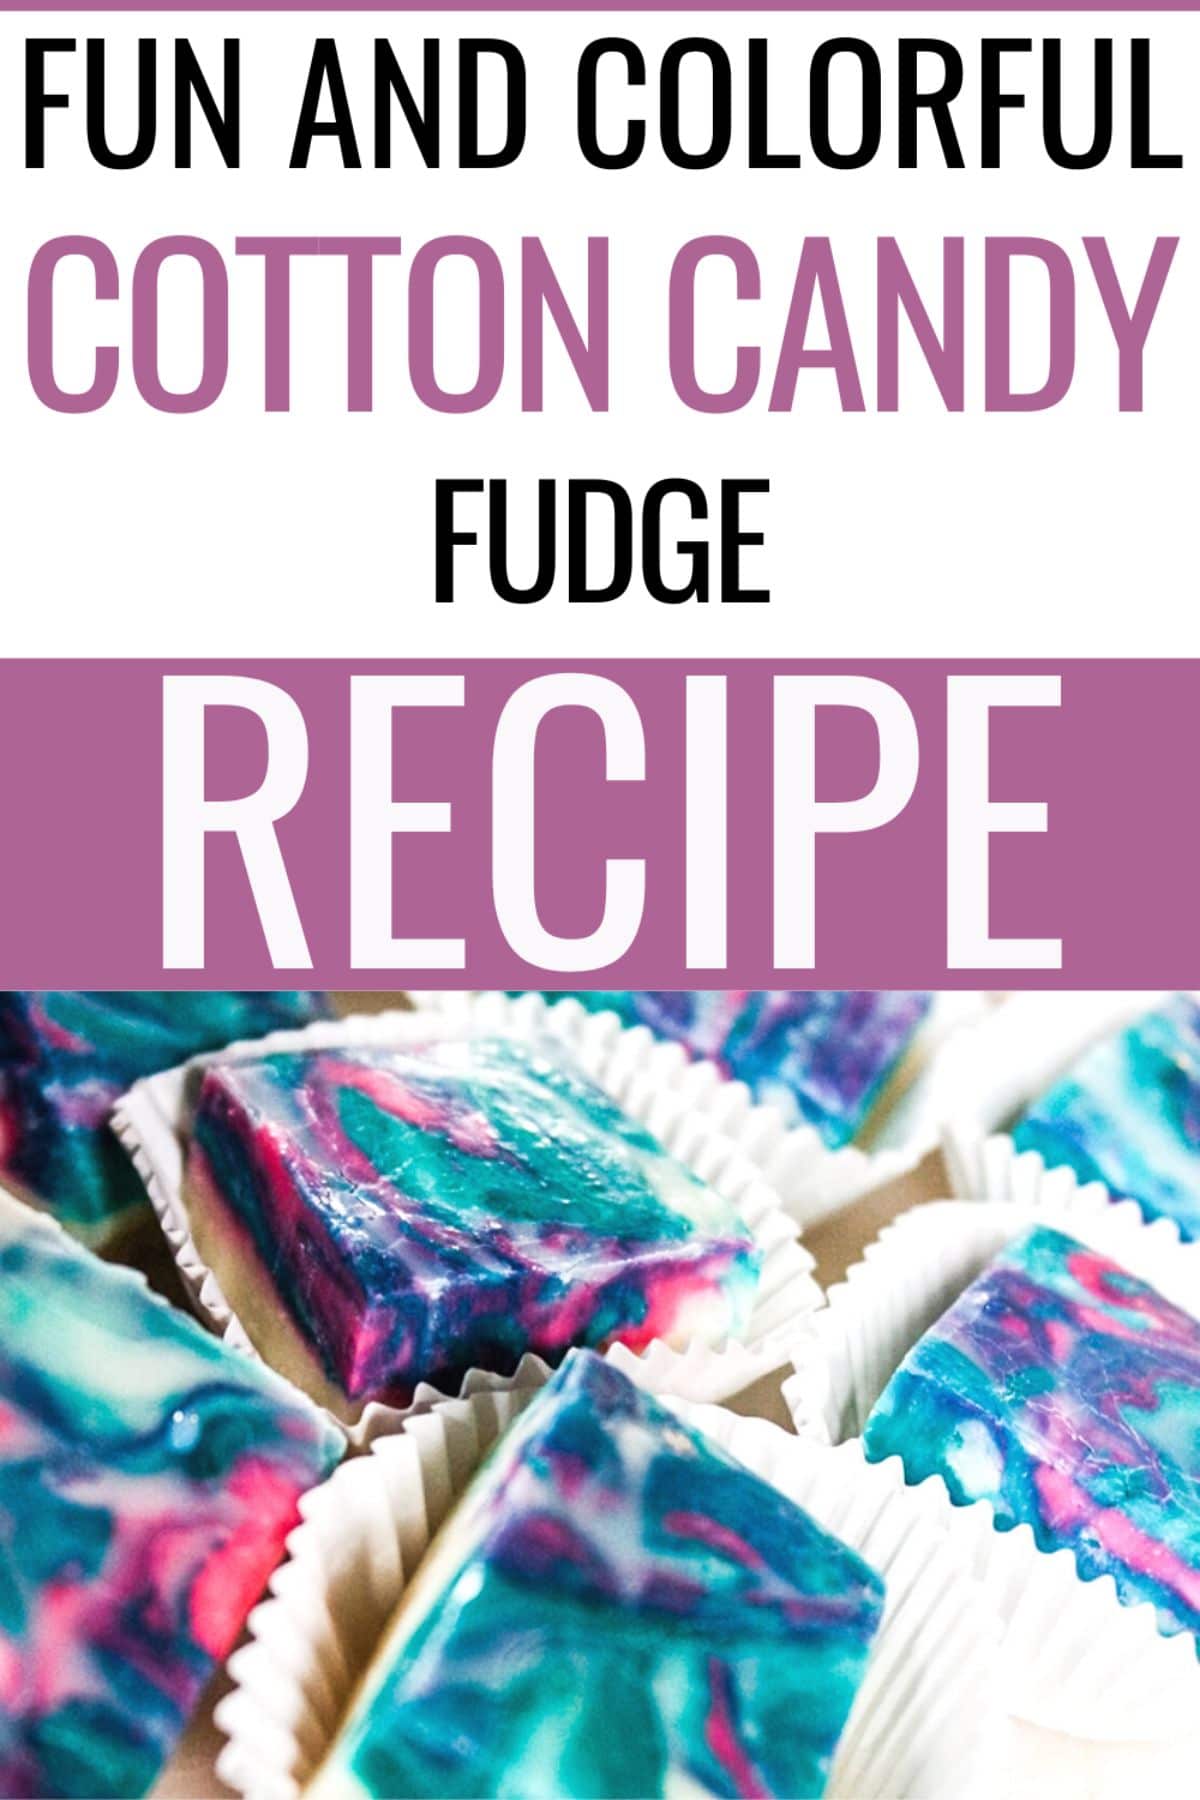 Cotton-Candy-Fudge-1